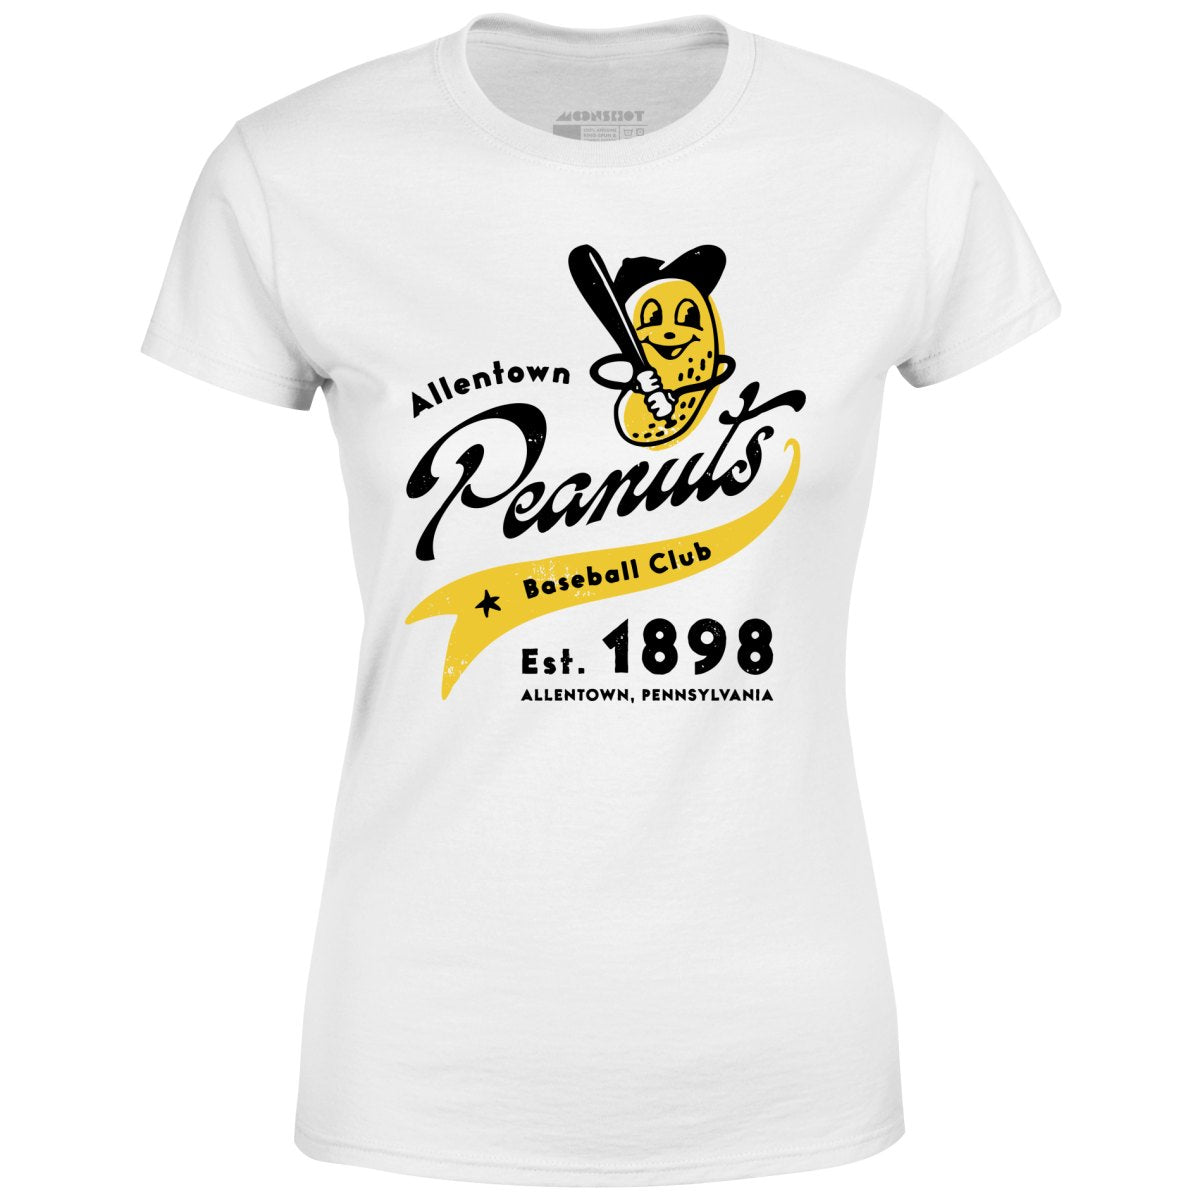 Allentown Peanuts - Pennsylvania - Vintage Defunct Baseball Teams - Women's T-Shirt